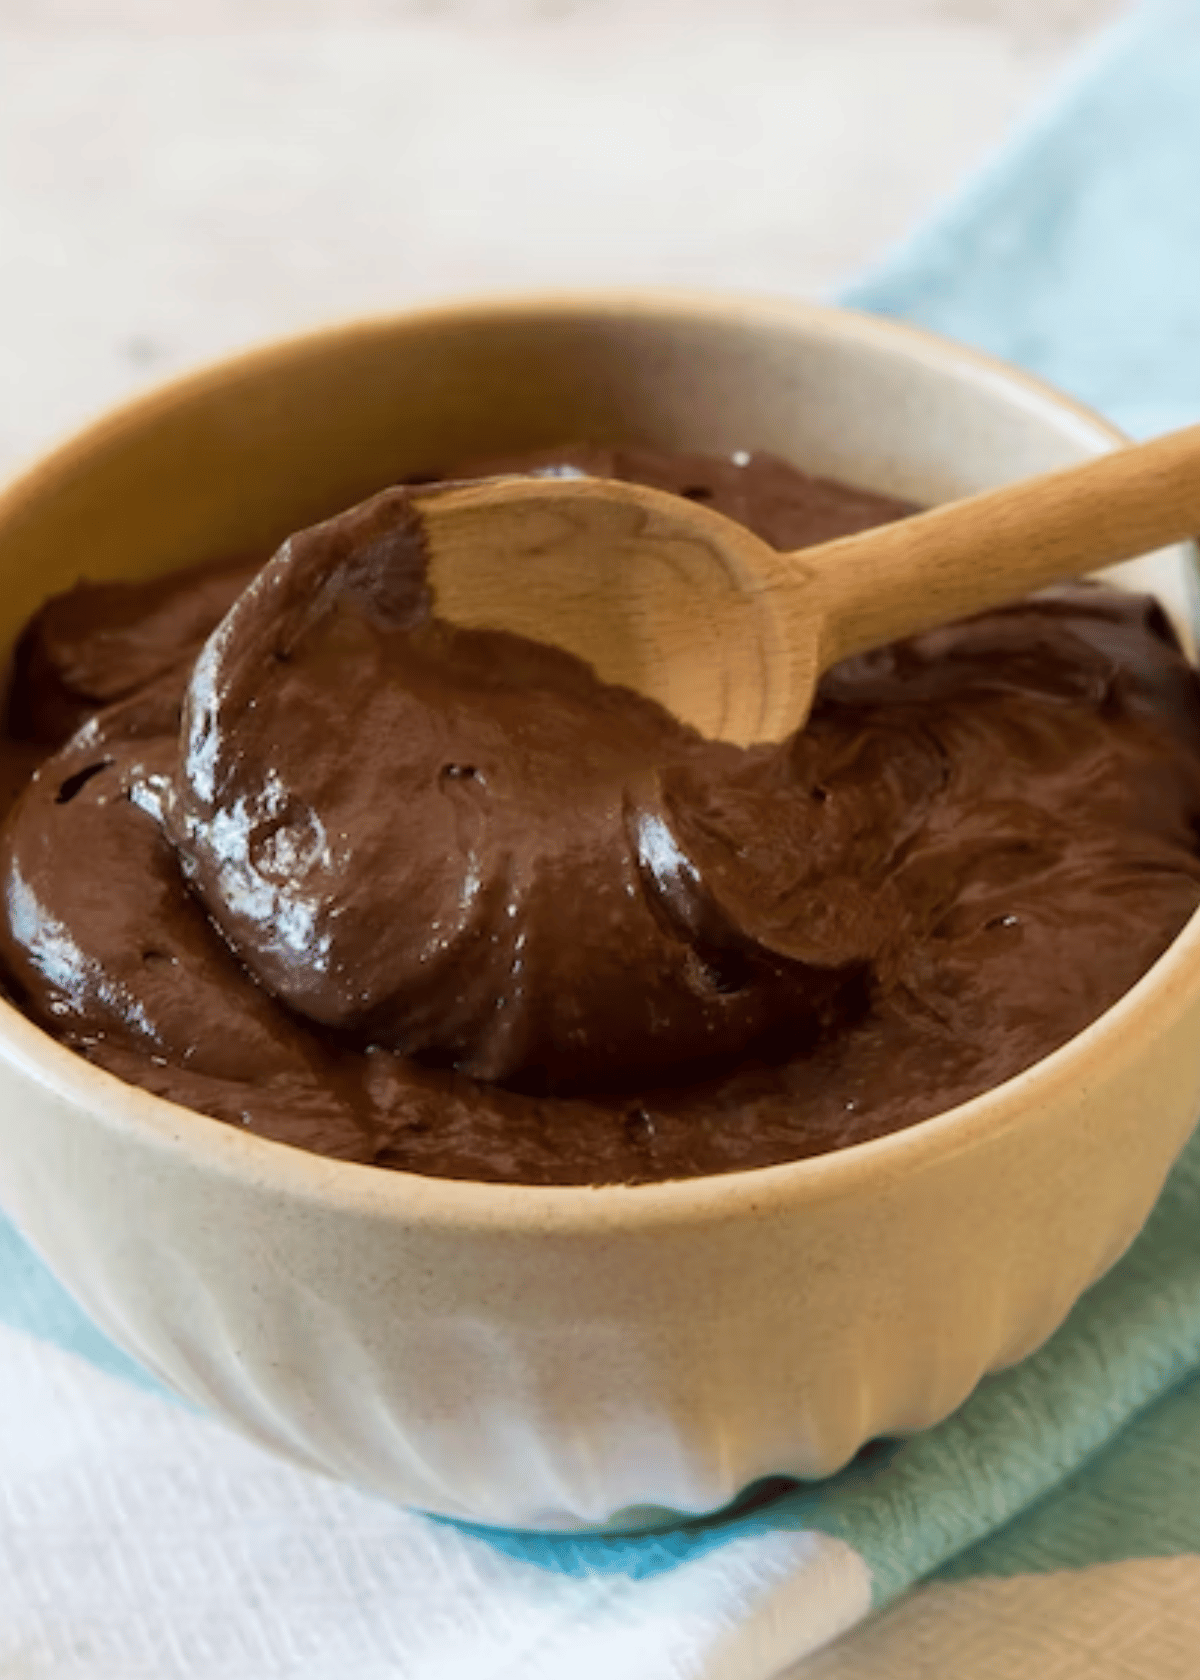 chocolate ganache recipe